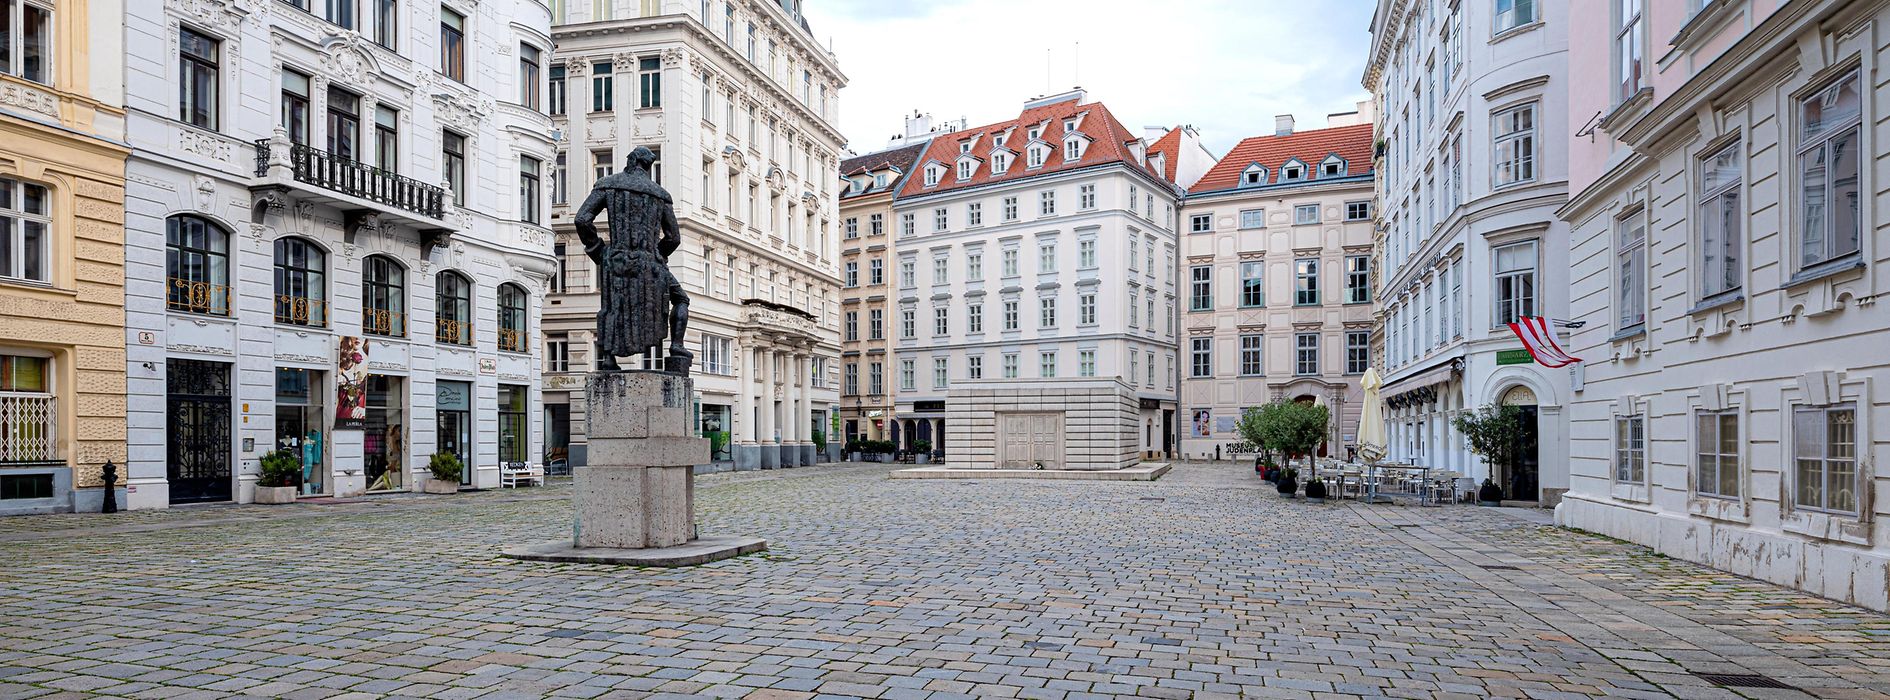 Monumento conmemorativo en la Judenplatz 